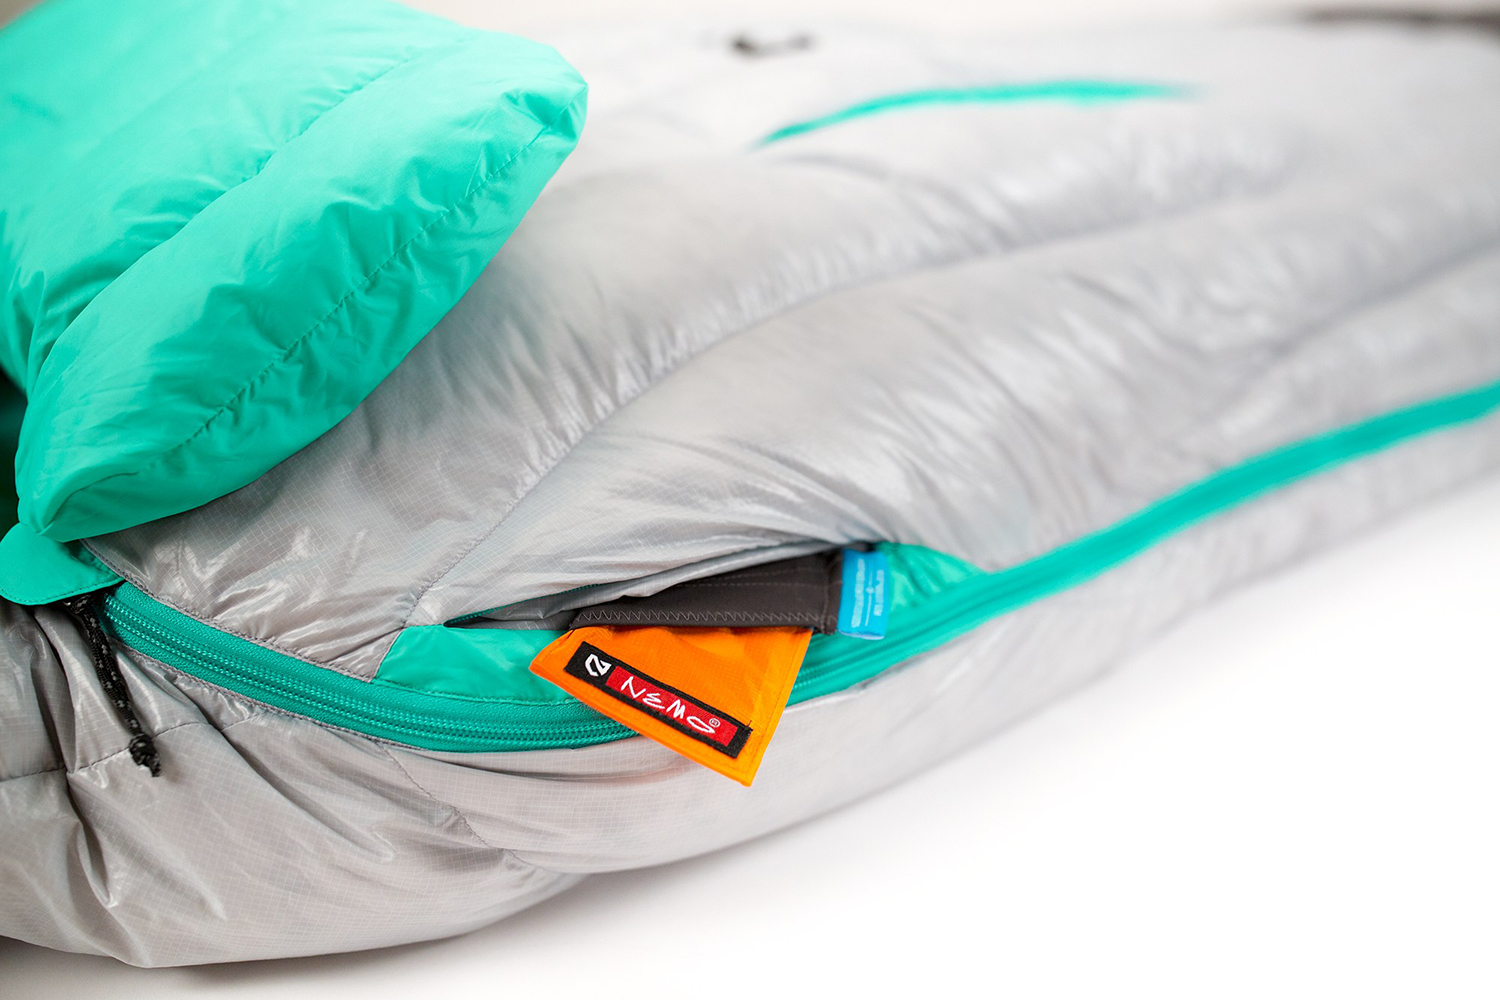 nemo sleeping bag with air mattress